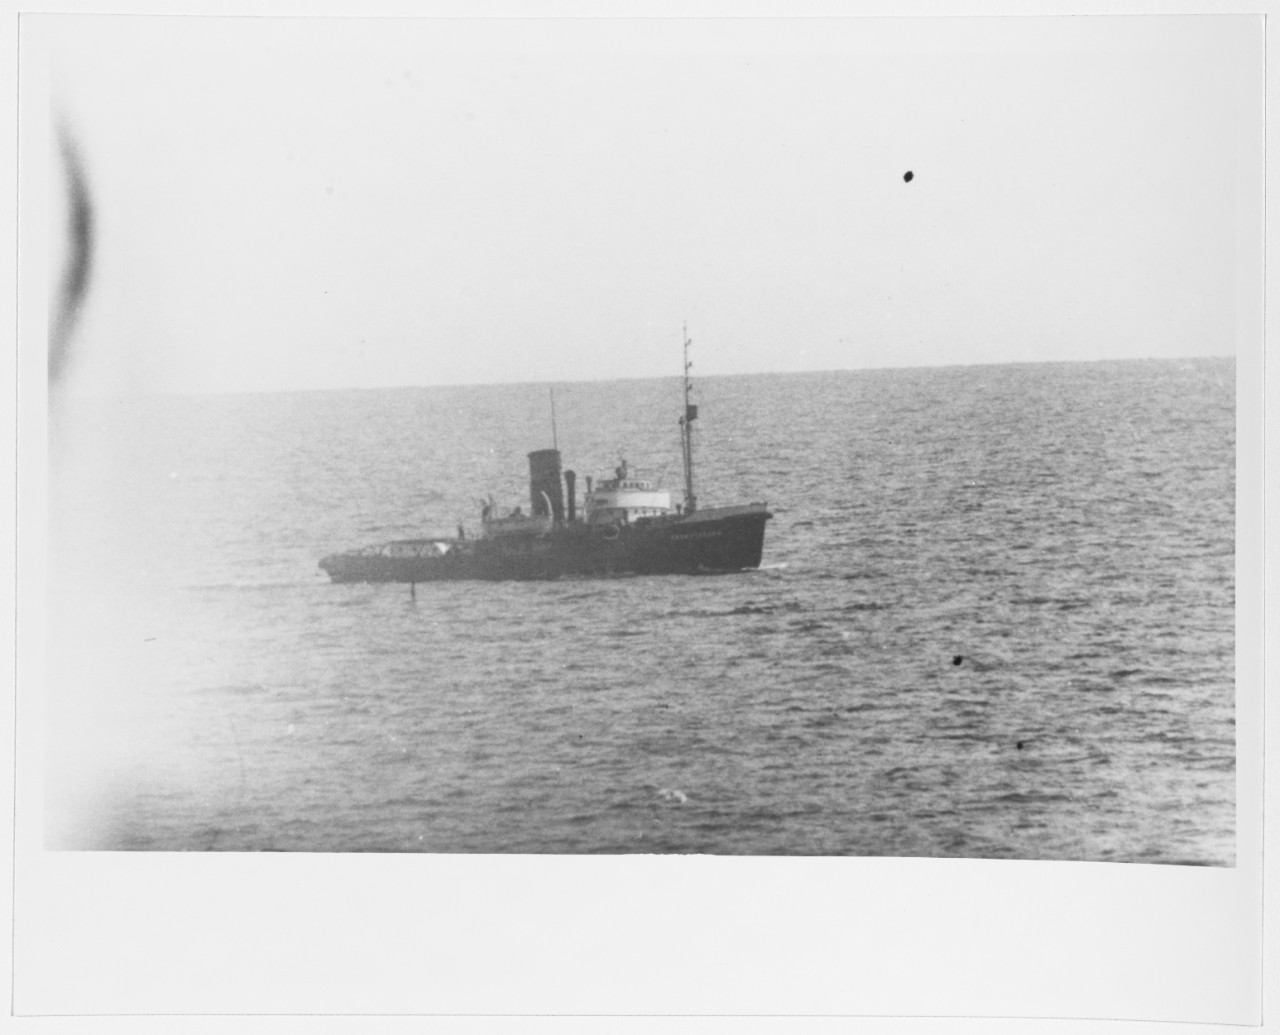 Soviet Merchant Tug